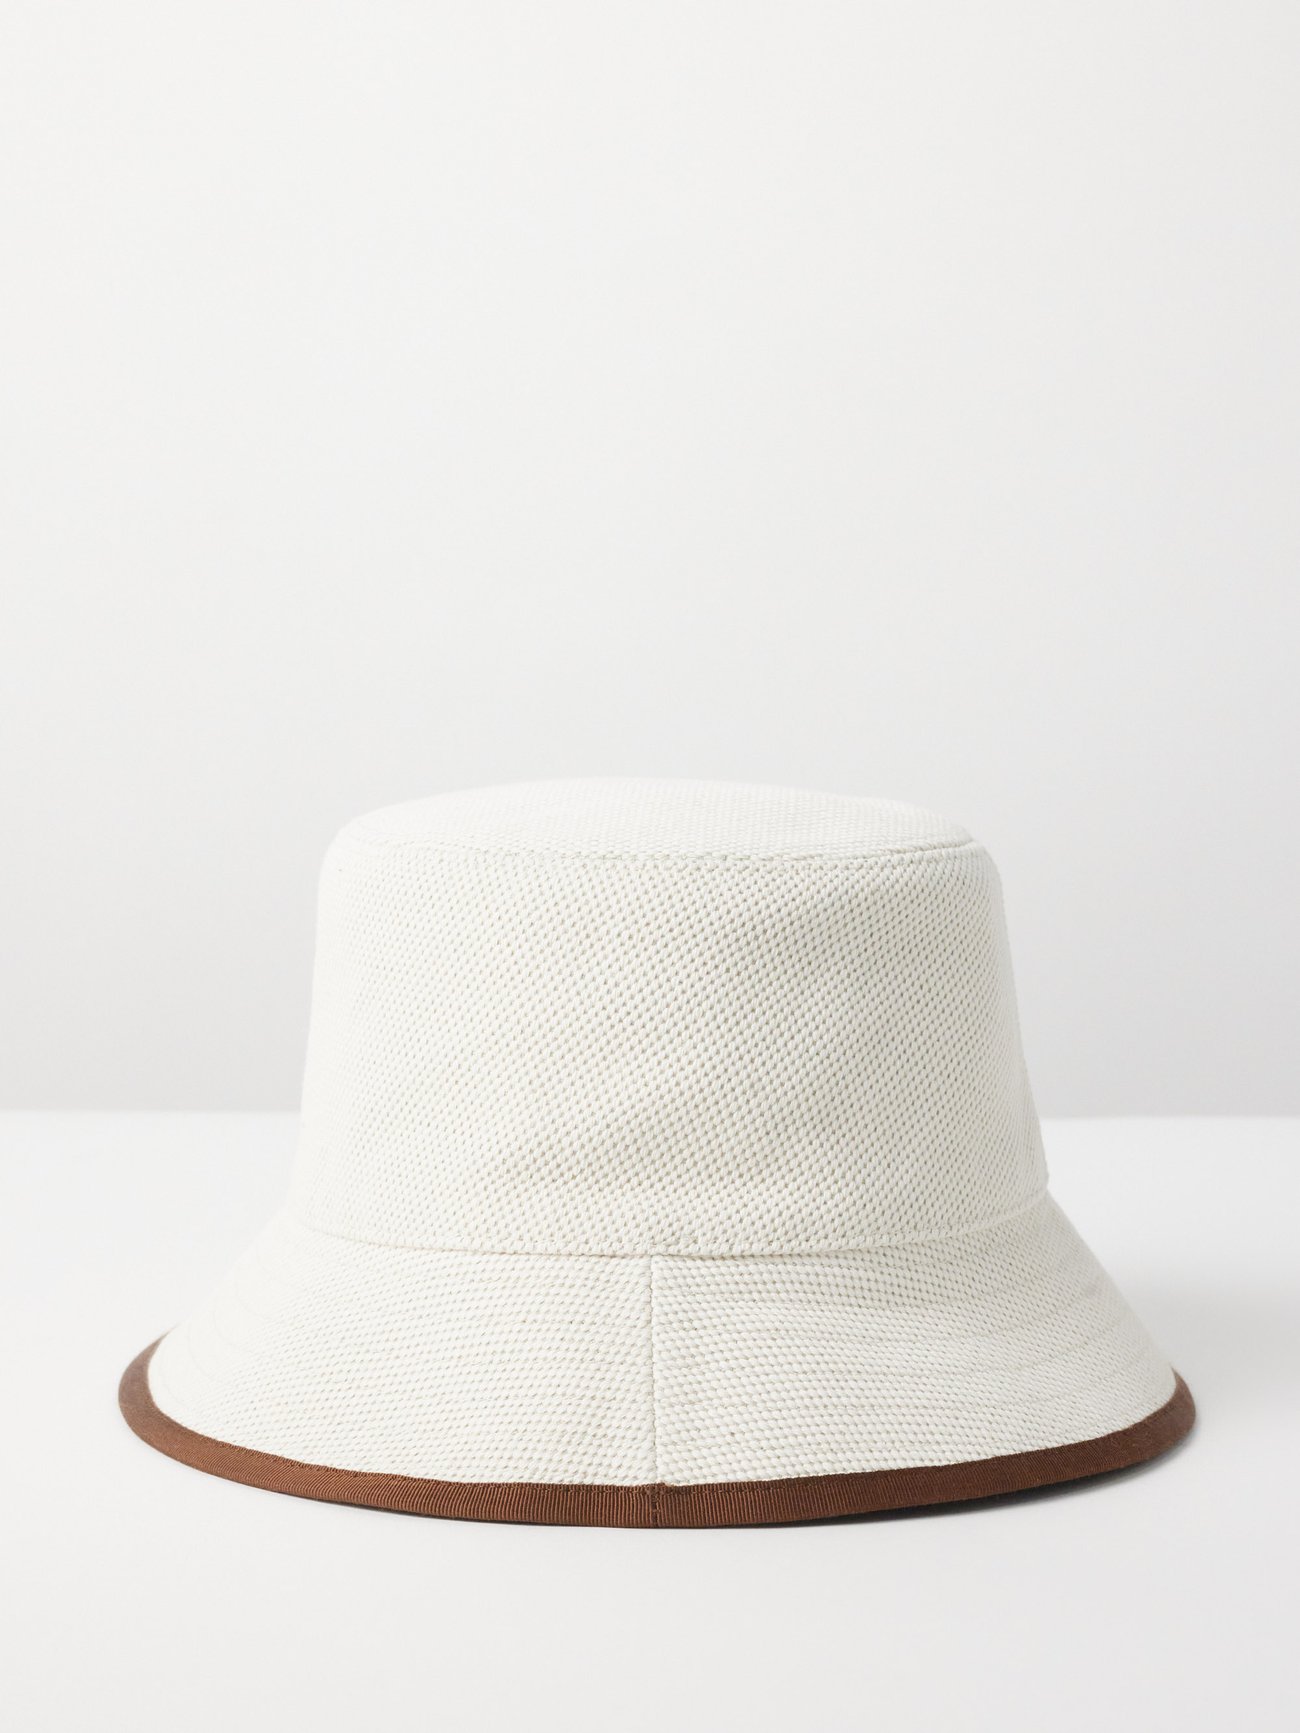 Hat Gucci White size M International in Cotton - 40827915